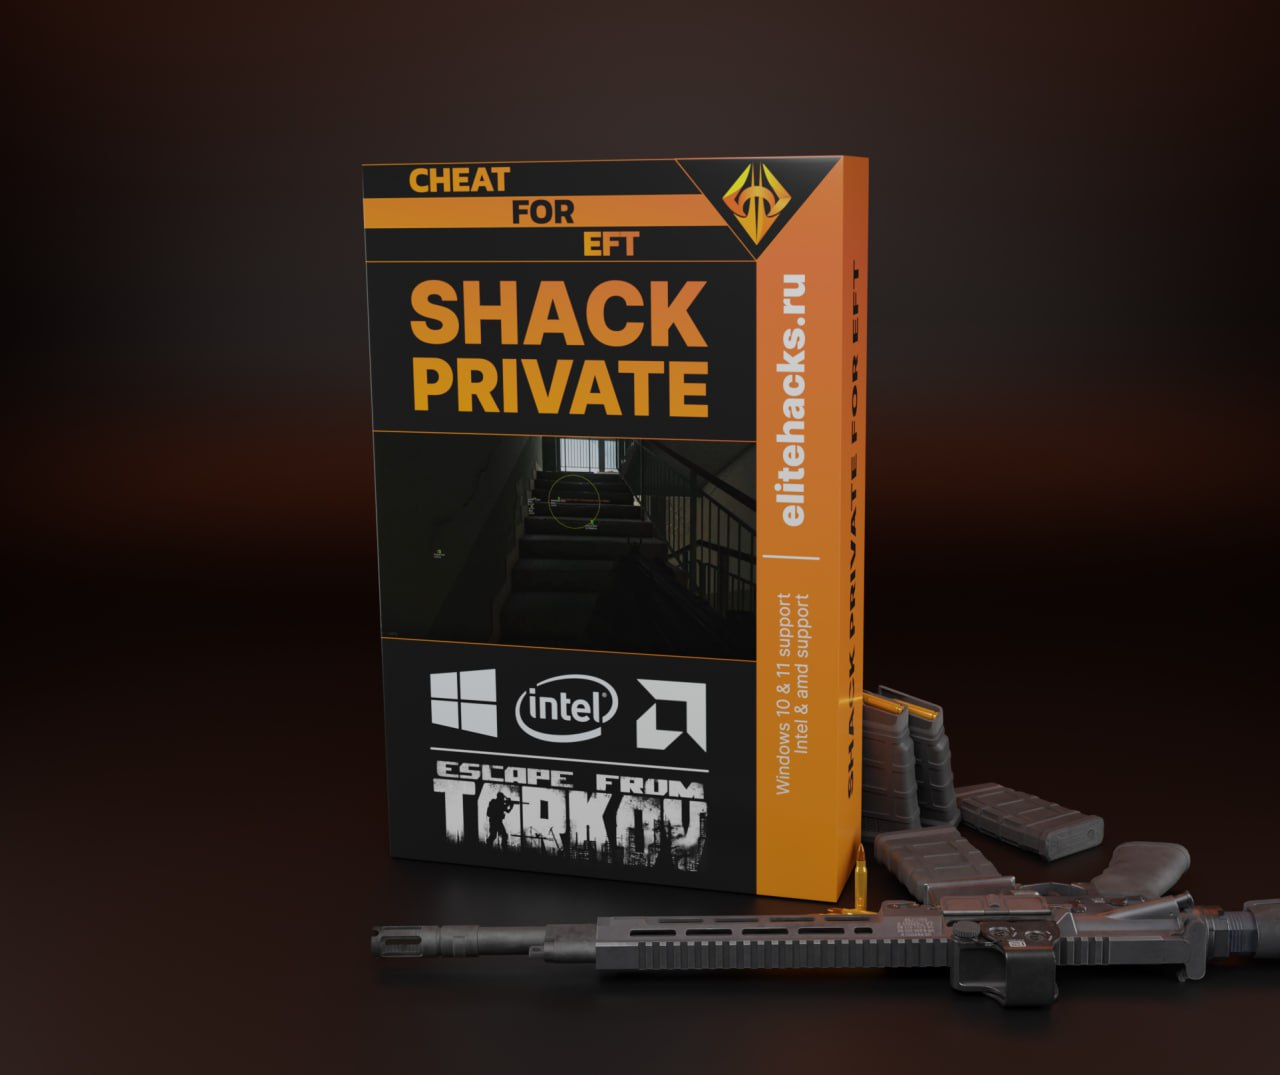 SHACK PRIVATE